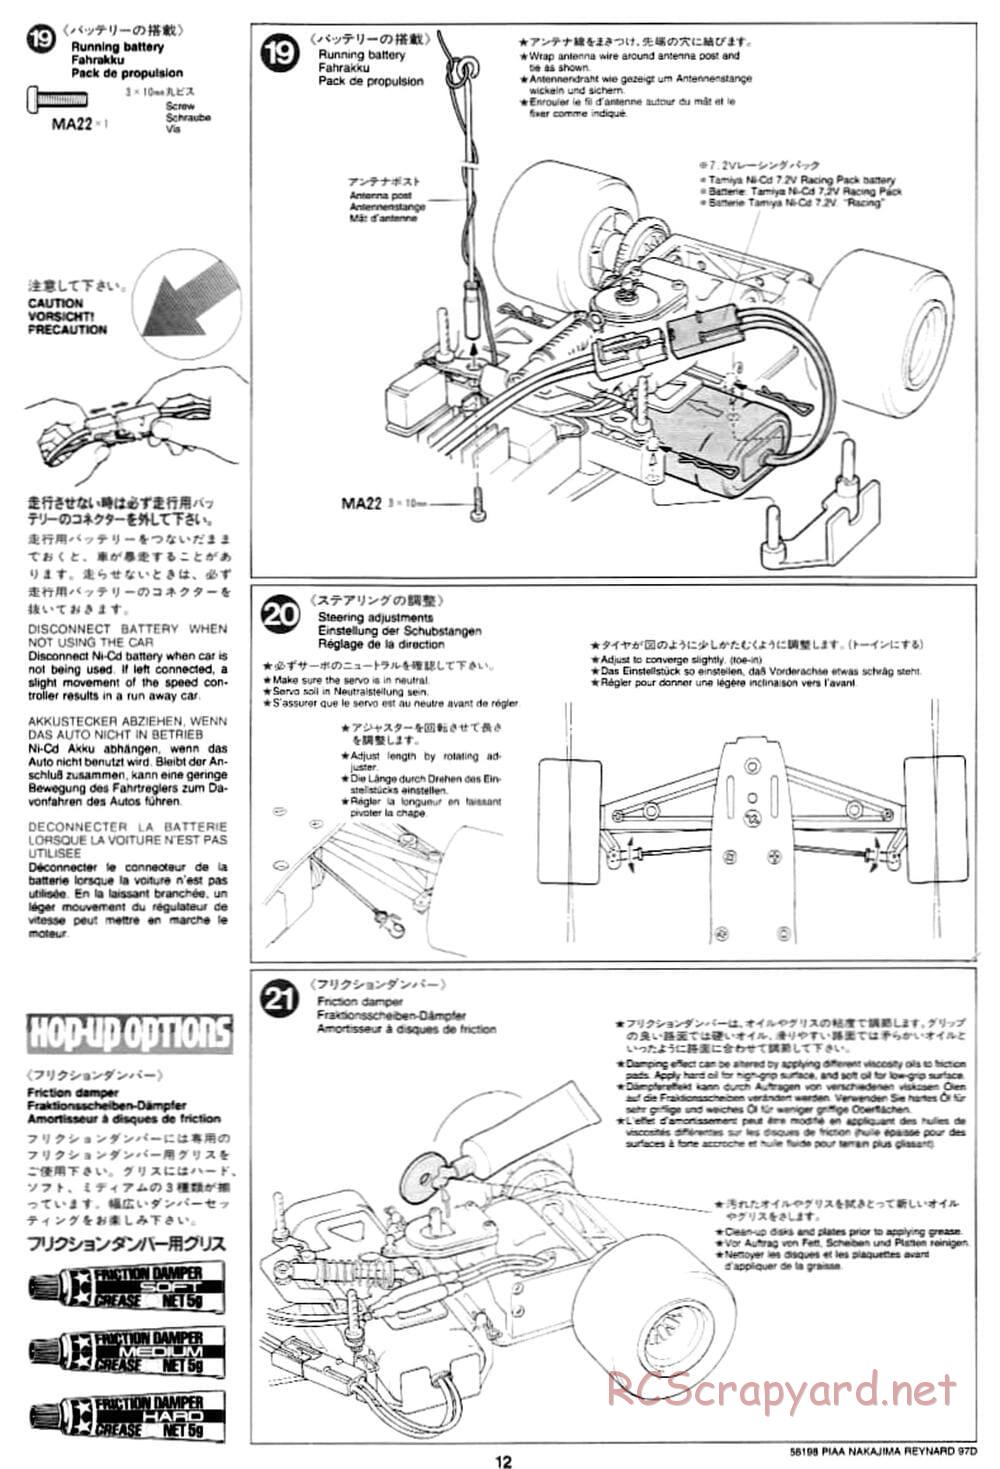 Tamiya - PIAA Nakajima Reynard 97D - F103 Chassis - Manuel - Page 12